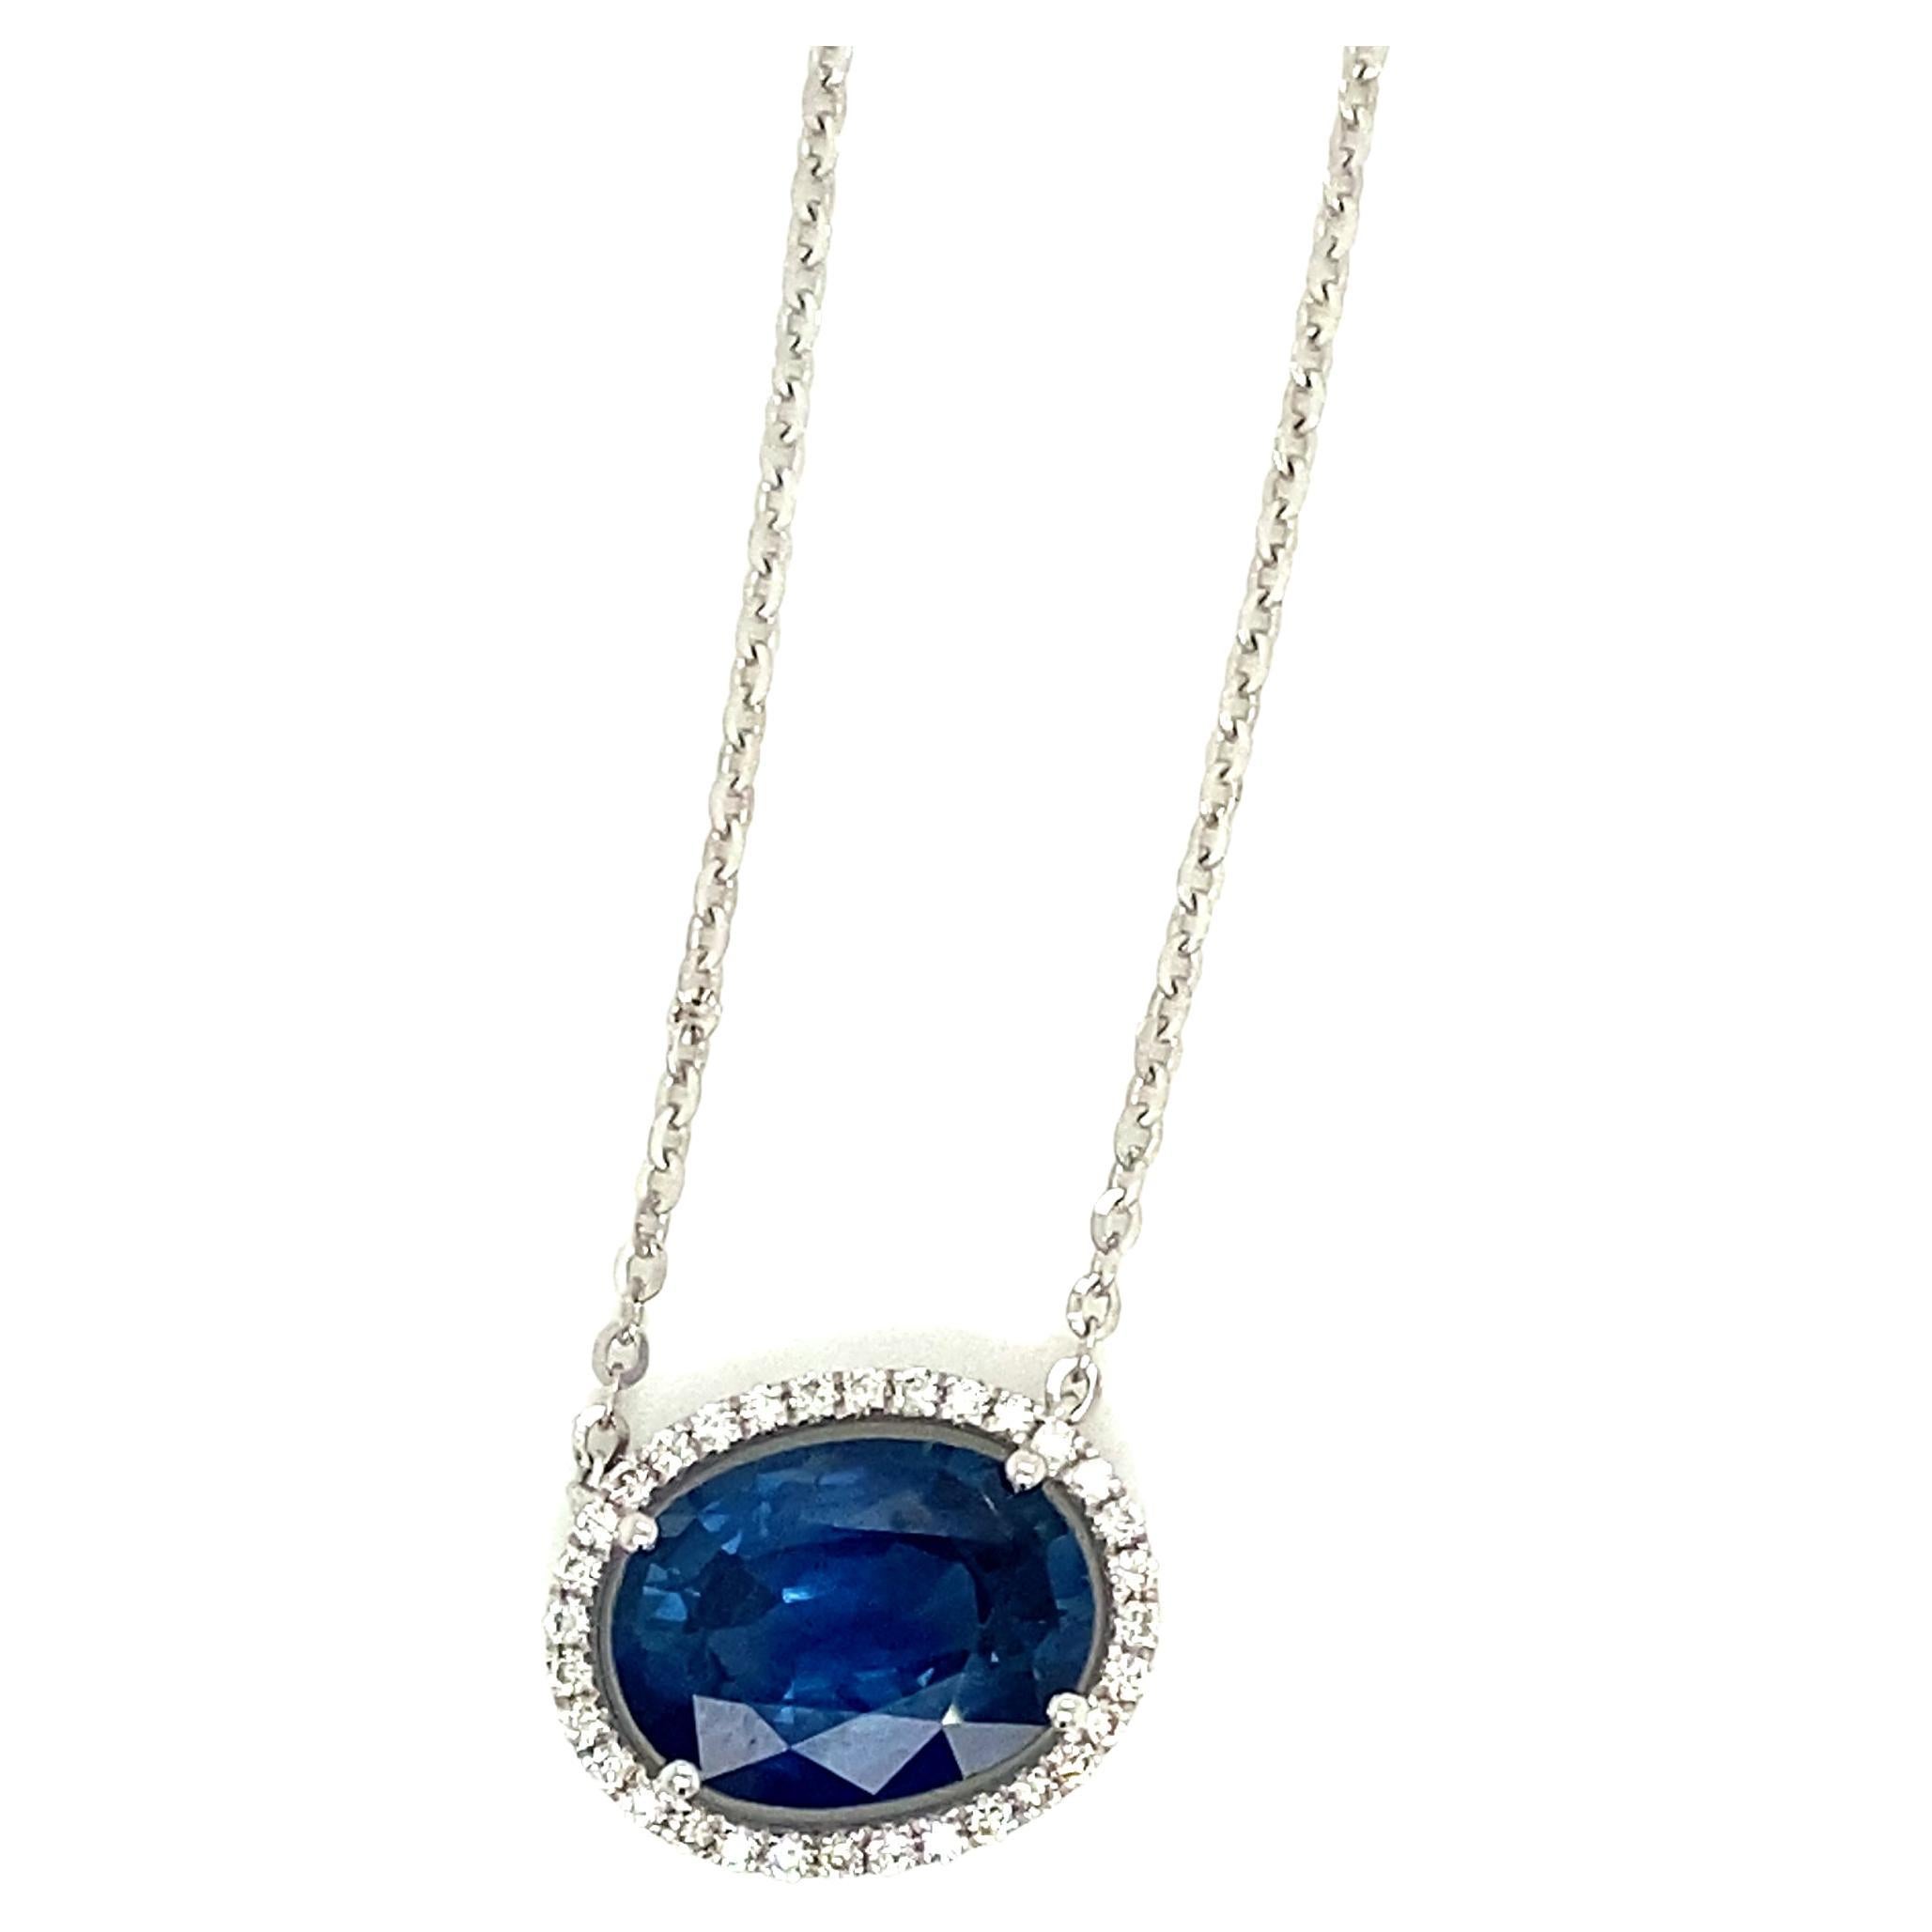 4.96 Carat Oval-Cut Vivid Blue Sapphire and White Diamond Pendant Necklace For Sale